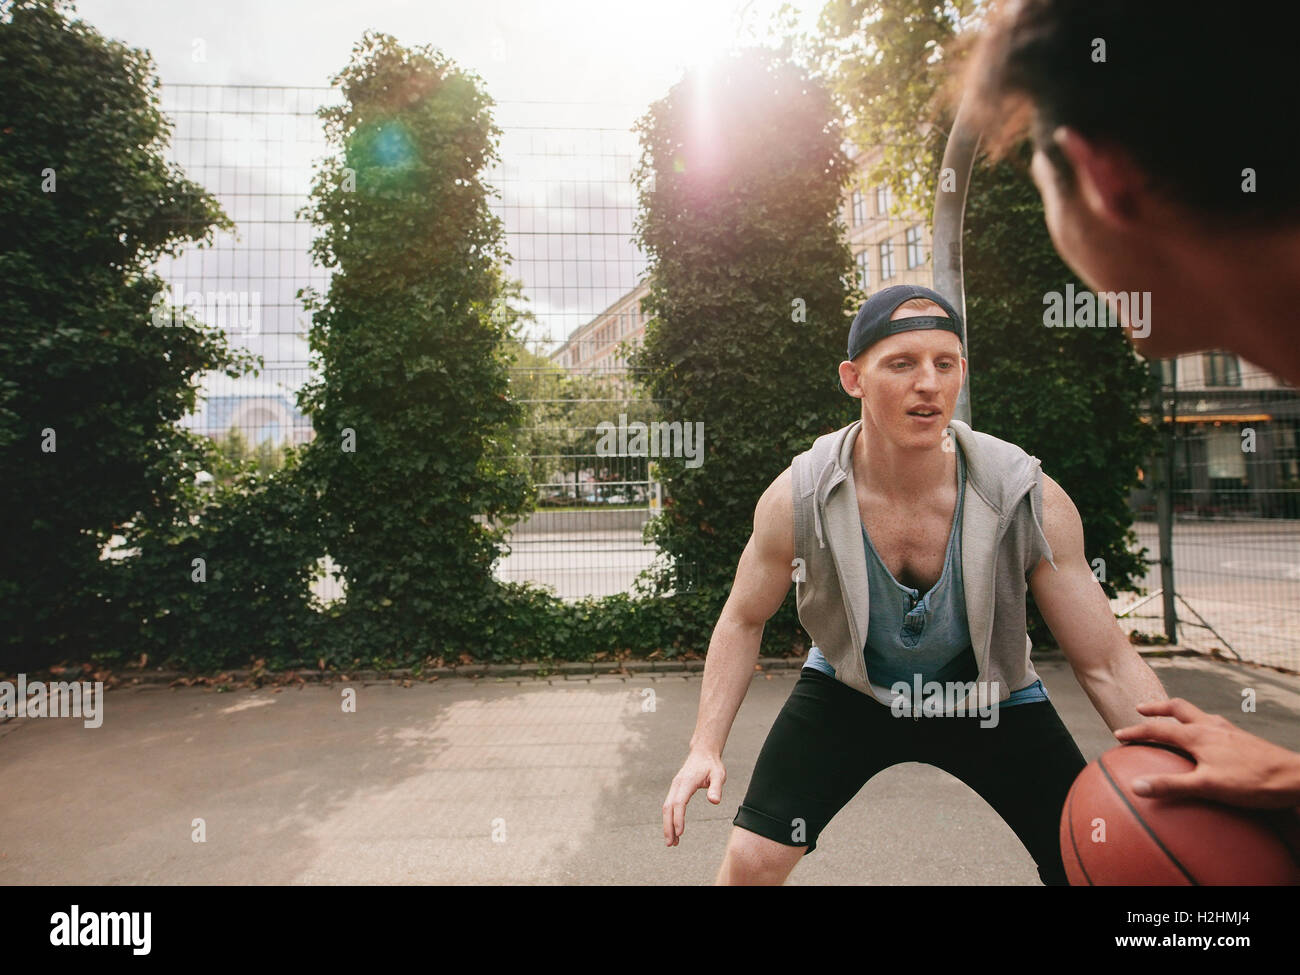 Zwei Streetball Spieler auf dem Basketballplatz. Teenager Freunden Streetball zu spielen. Stockfoto